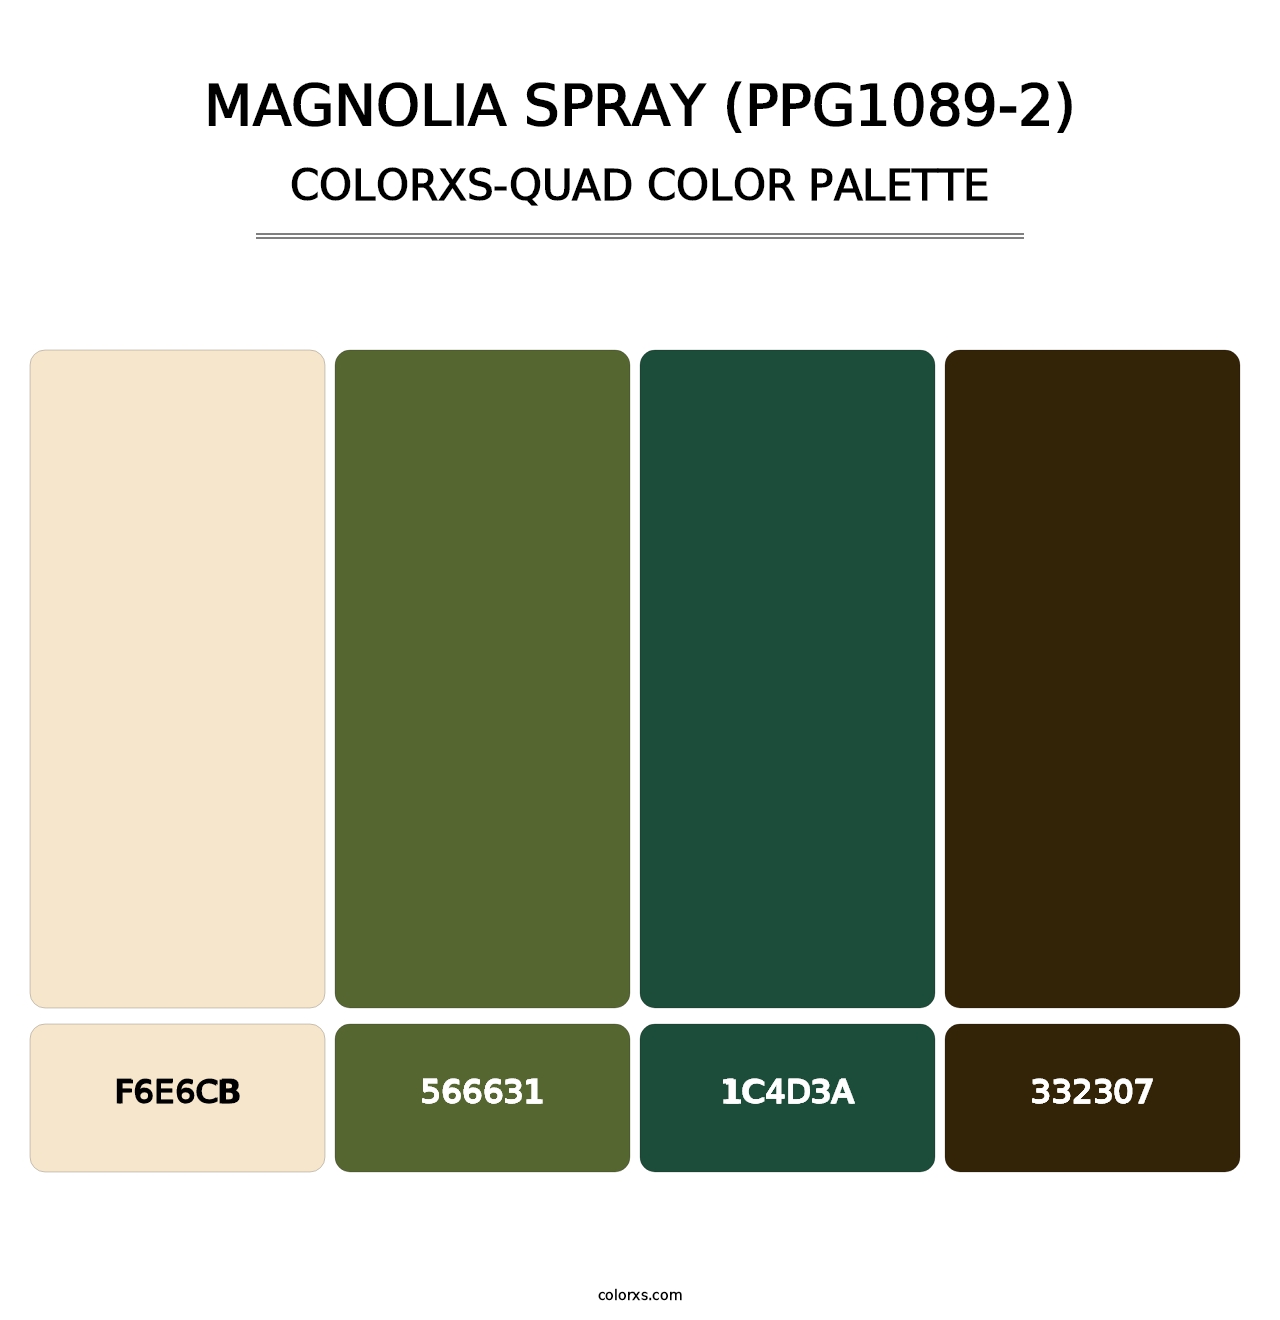 Magnolia Spray (PPG1089-2) - Colorxs Quad Palette